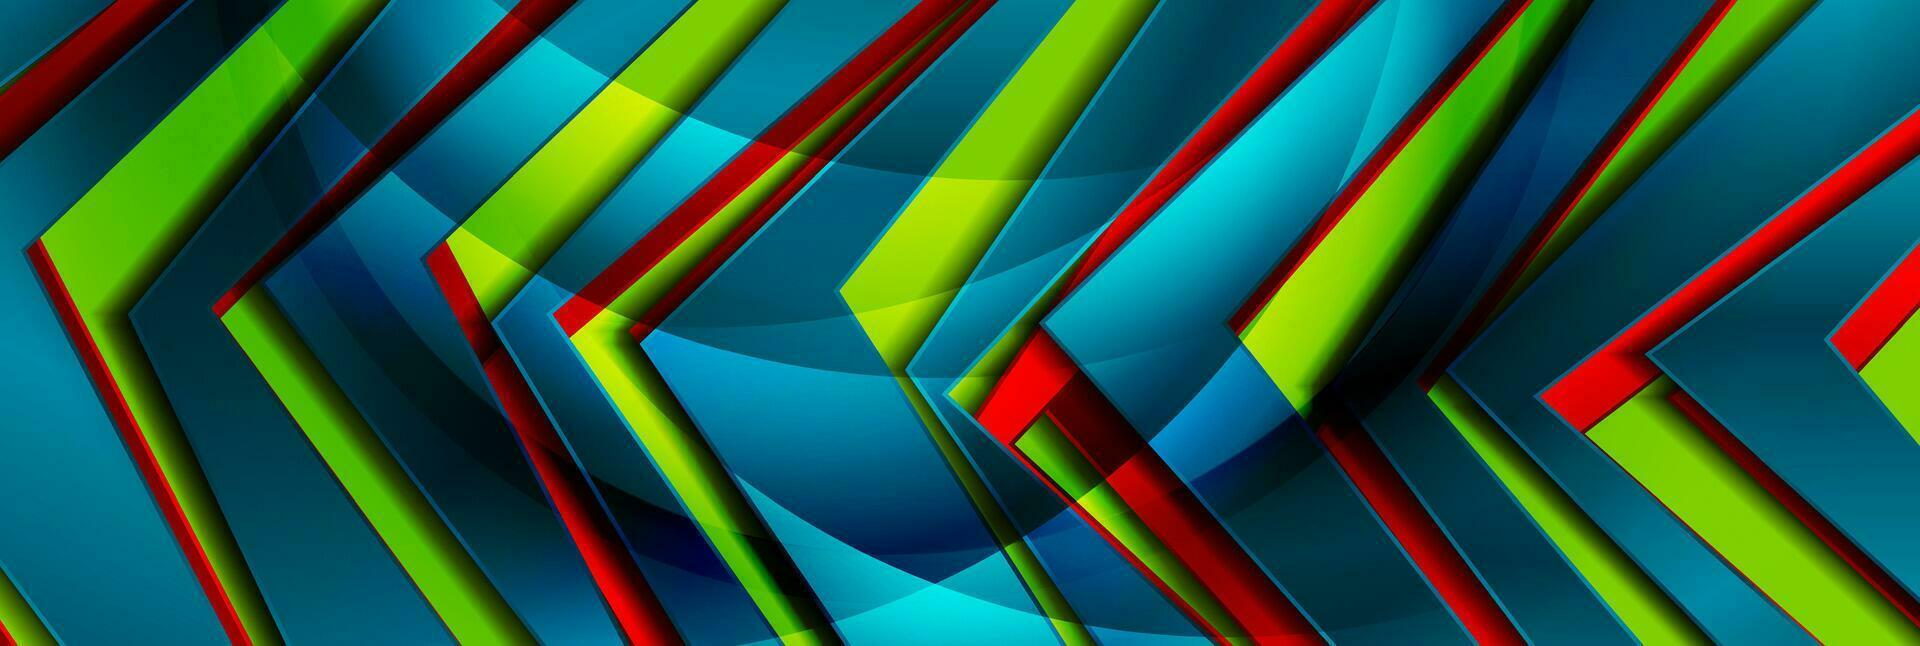 abstrakt färgrik glansig pilar geometrisk tech bakgrund vektor